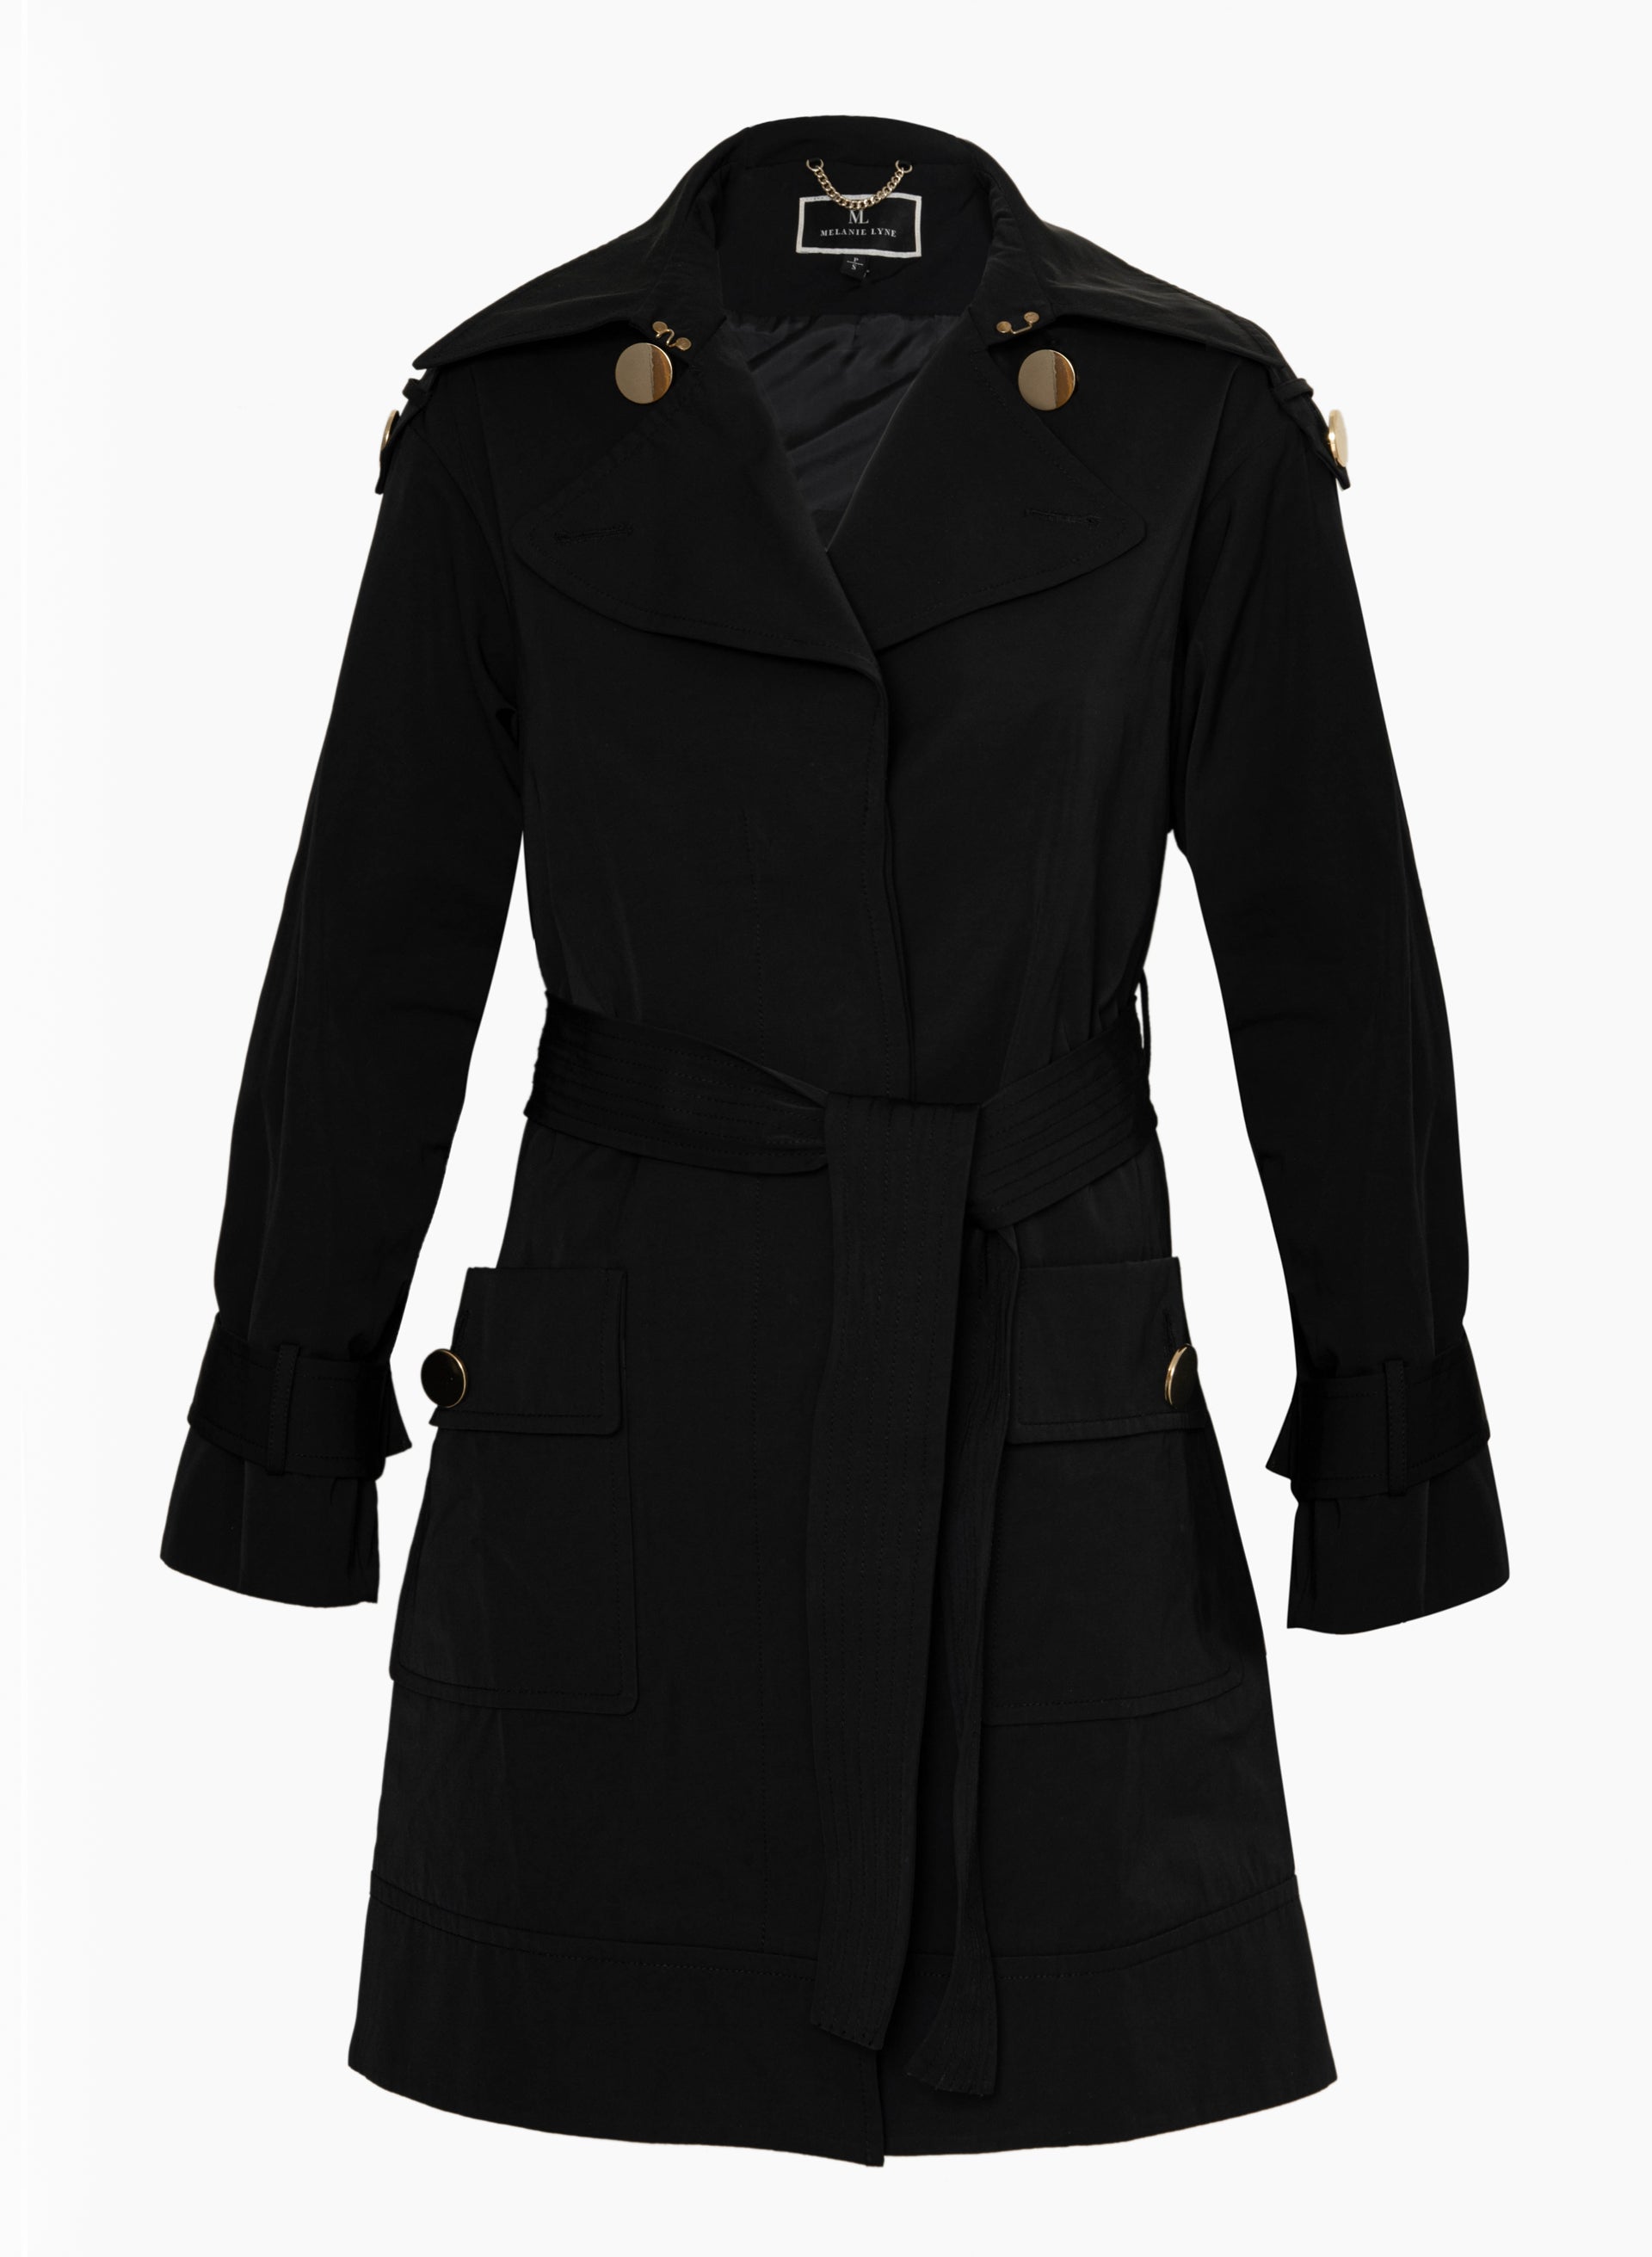 Melanie Lyne Women's Polyester/Cotton Button Detail Trench Coat in Black Size XL